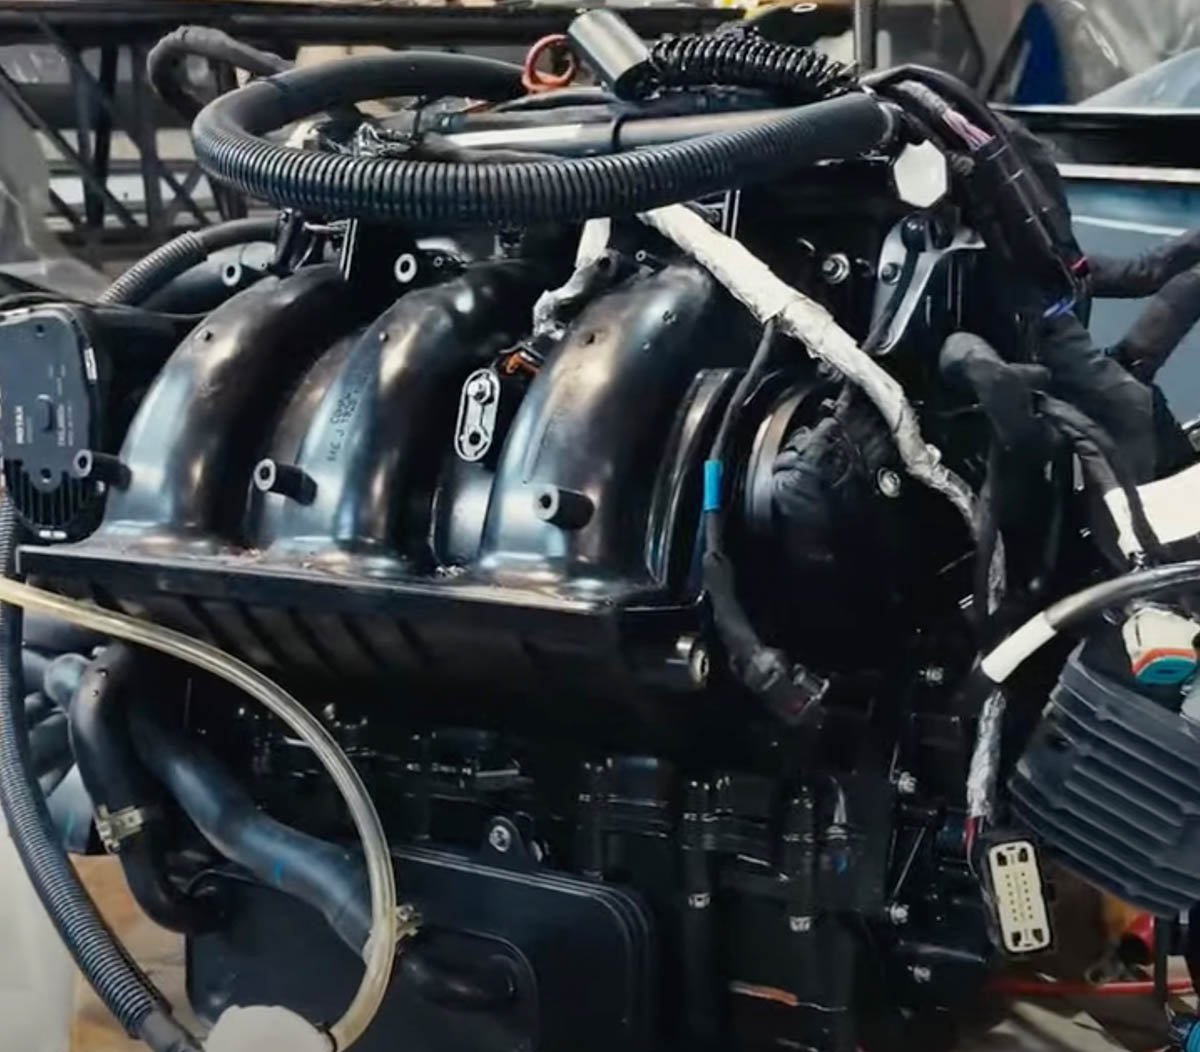 Двигатель компании Rotax. Скриншот видео Militarnyi Videonews / YouTube